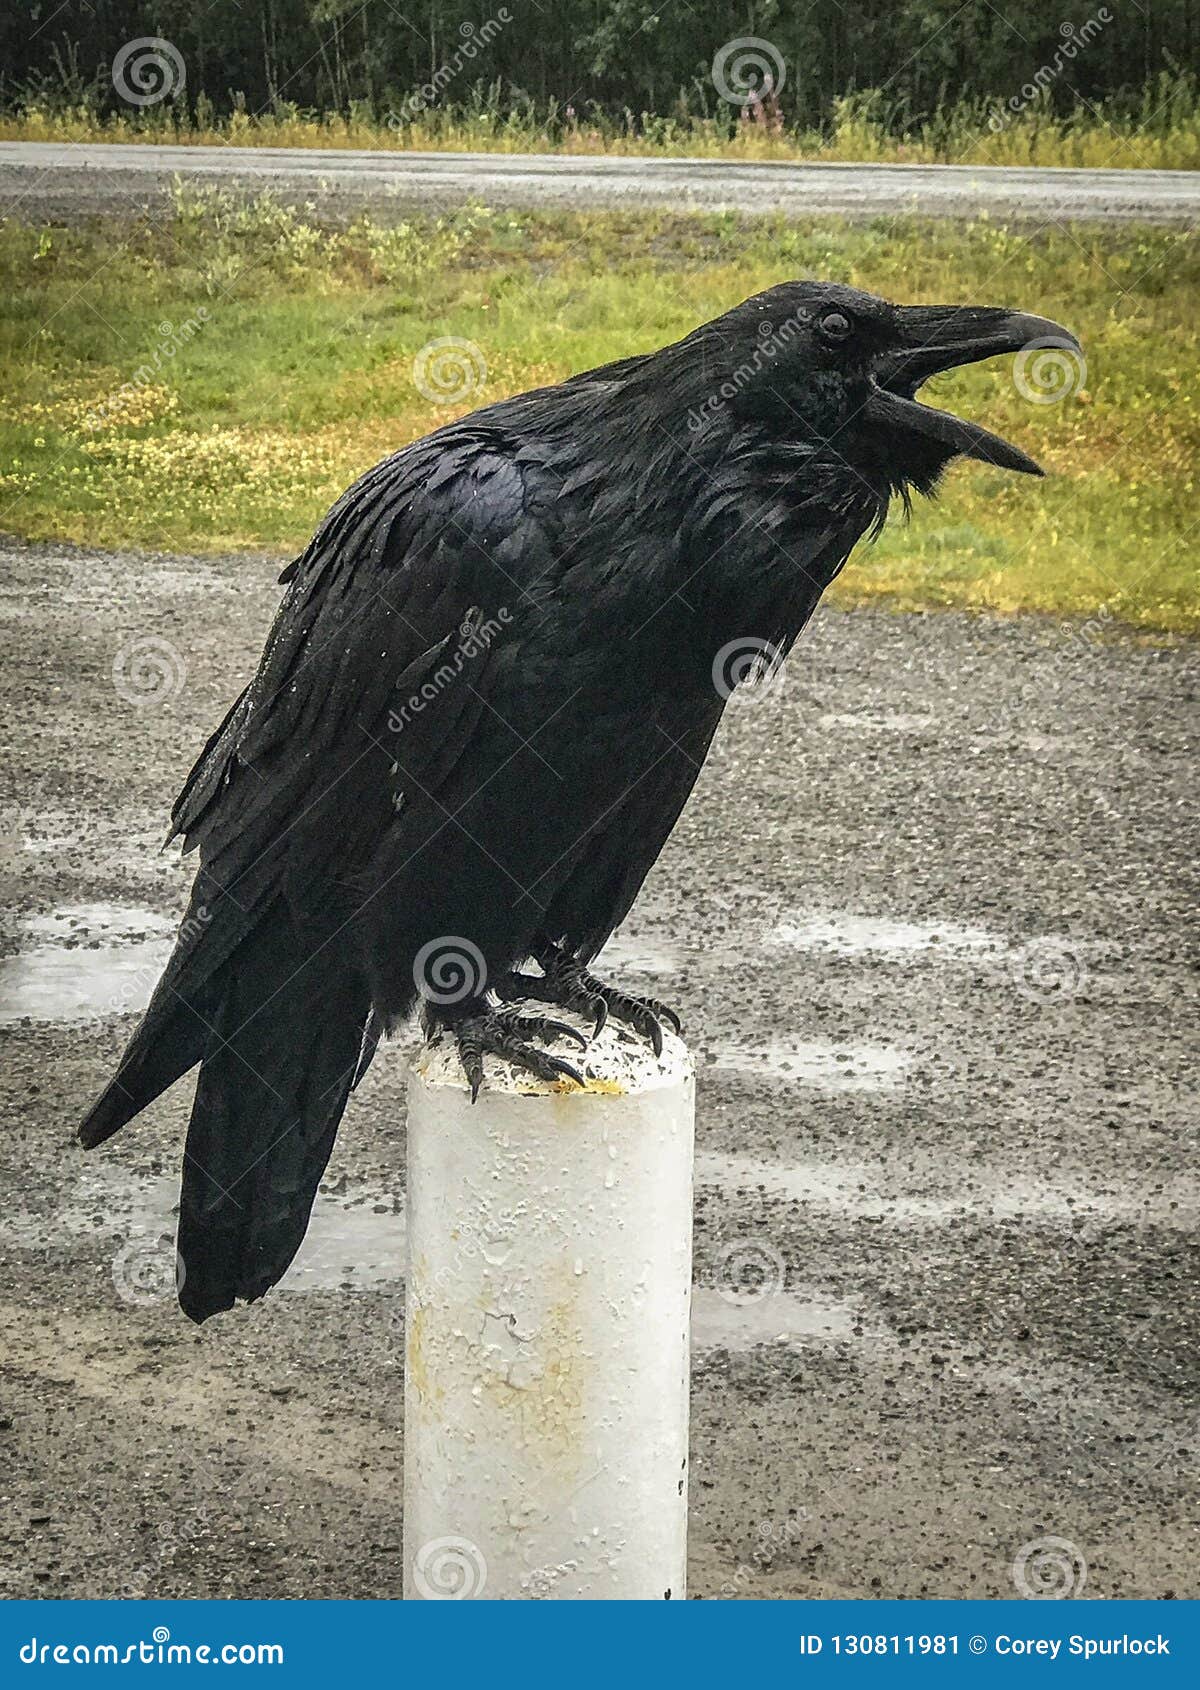 a large raven in the yukon territory